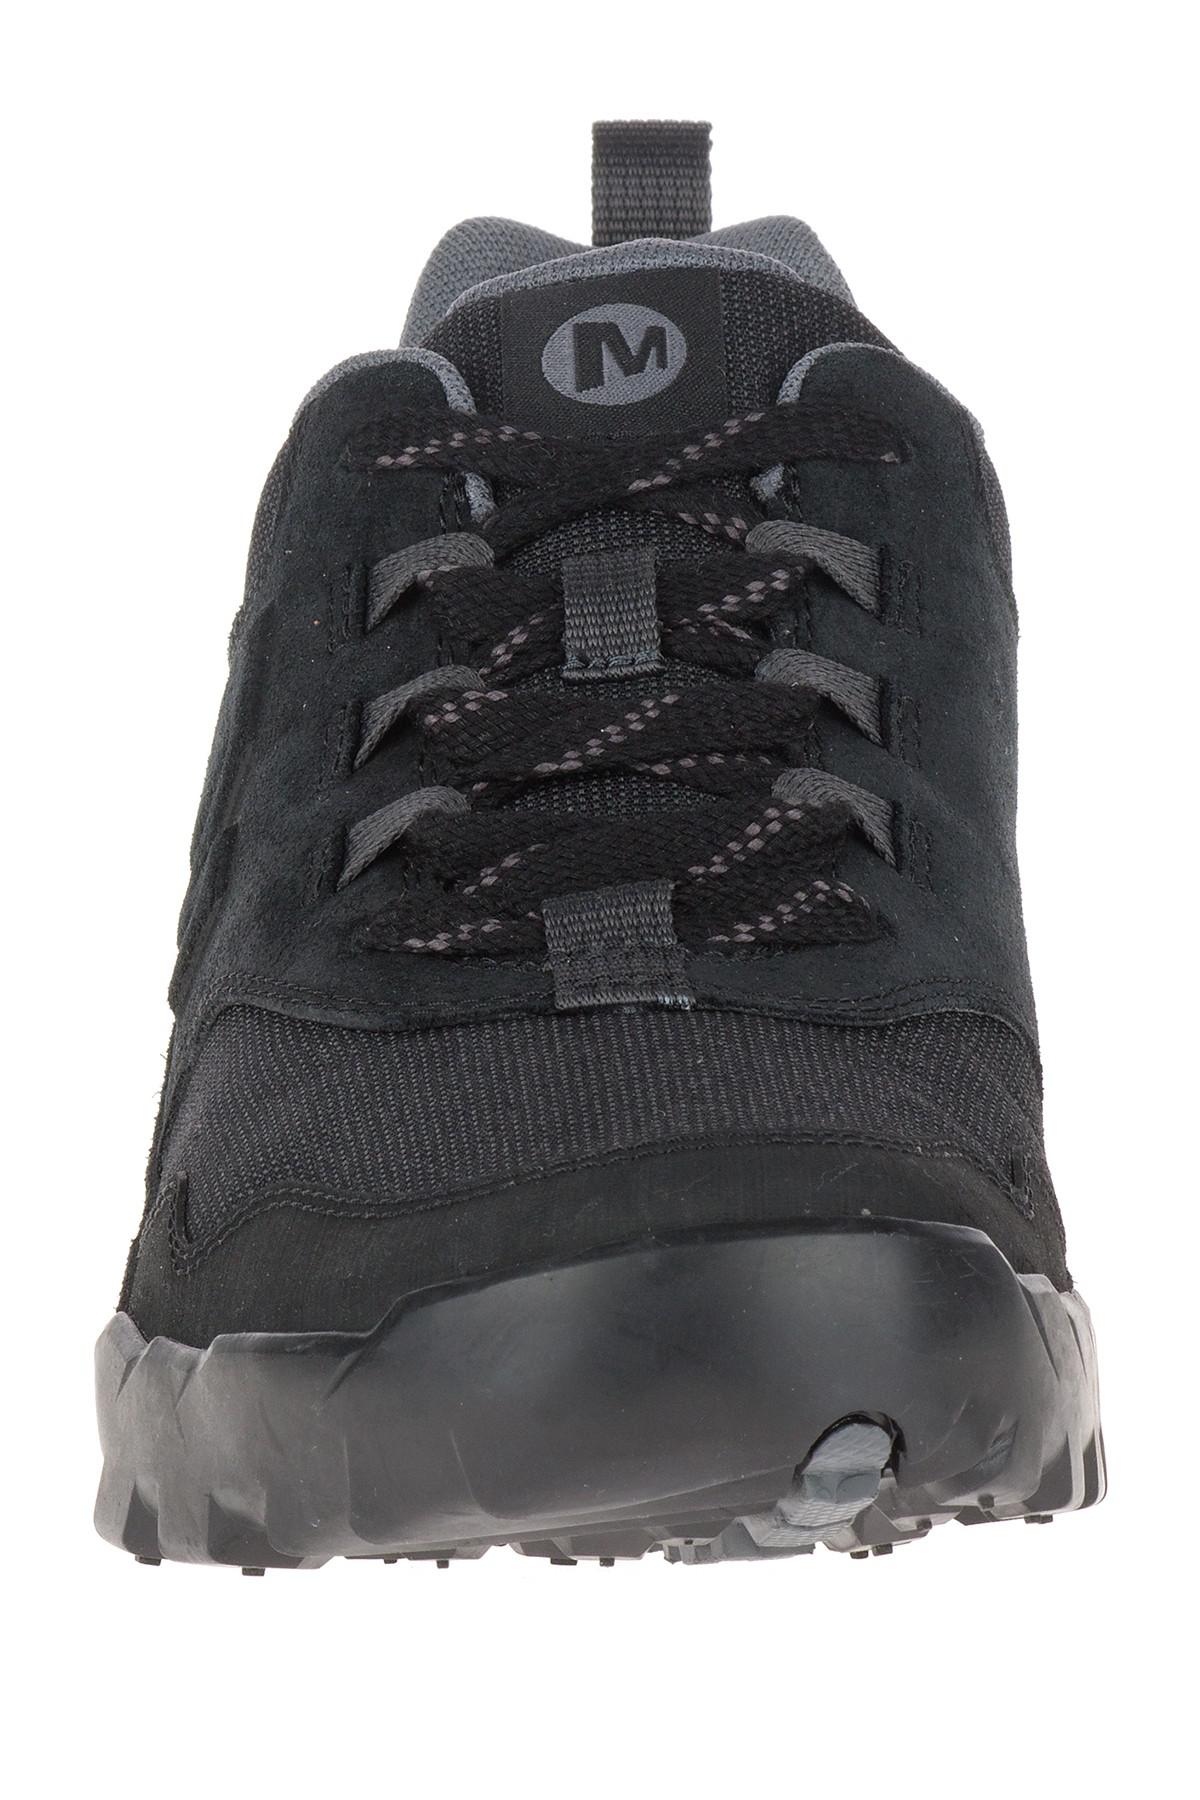 merrell men's annex recruit hiking shoe